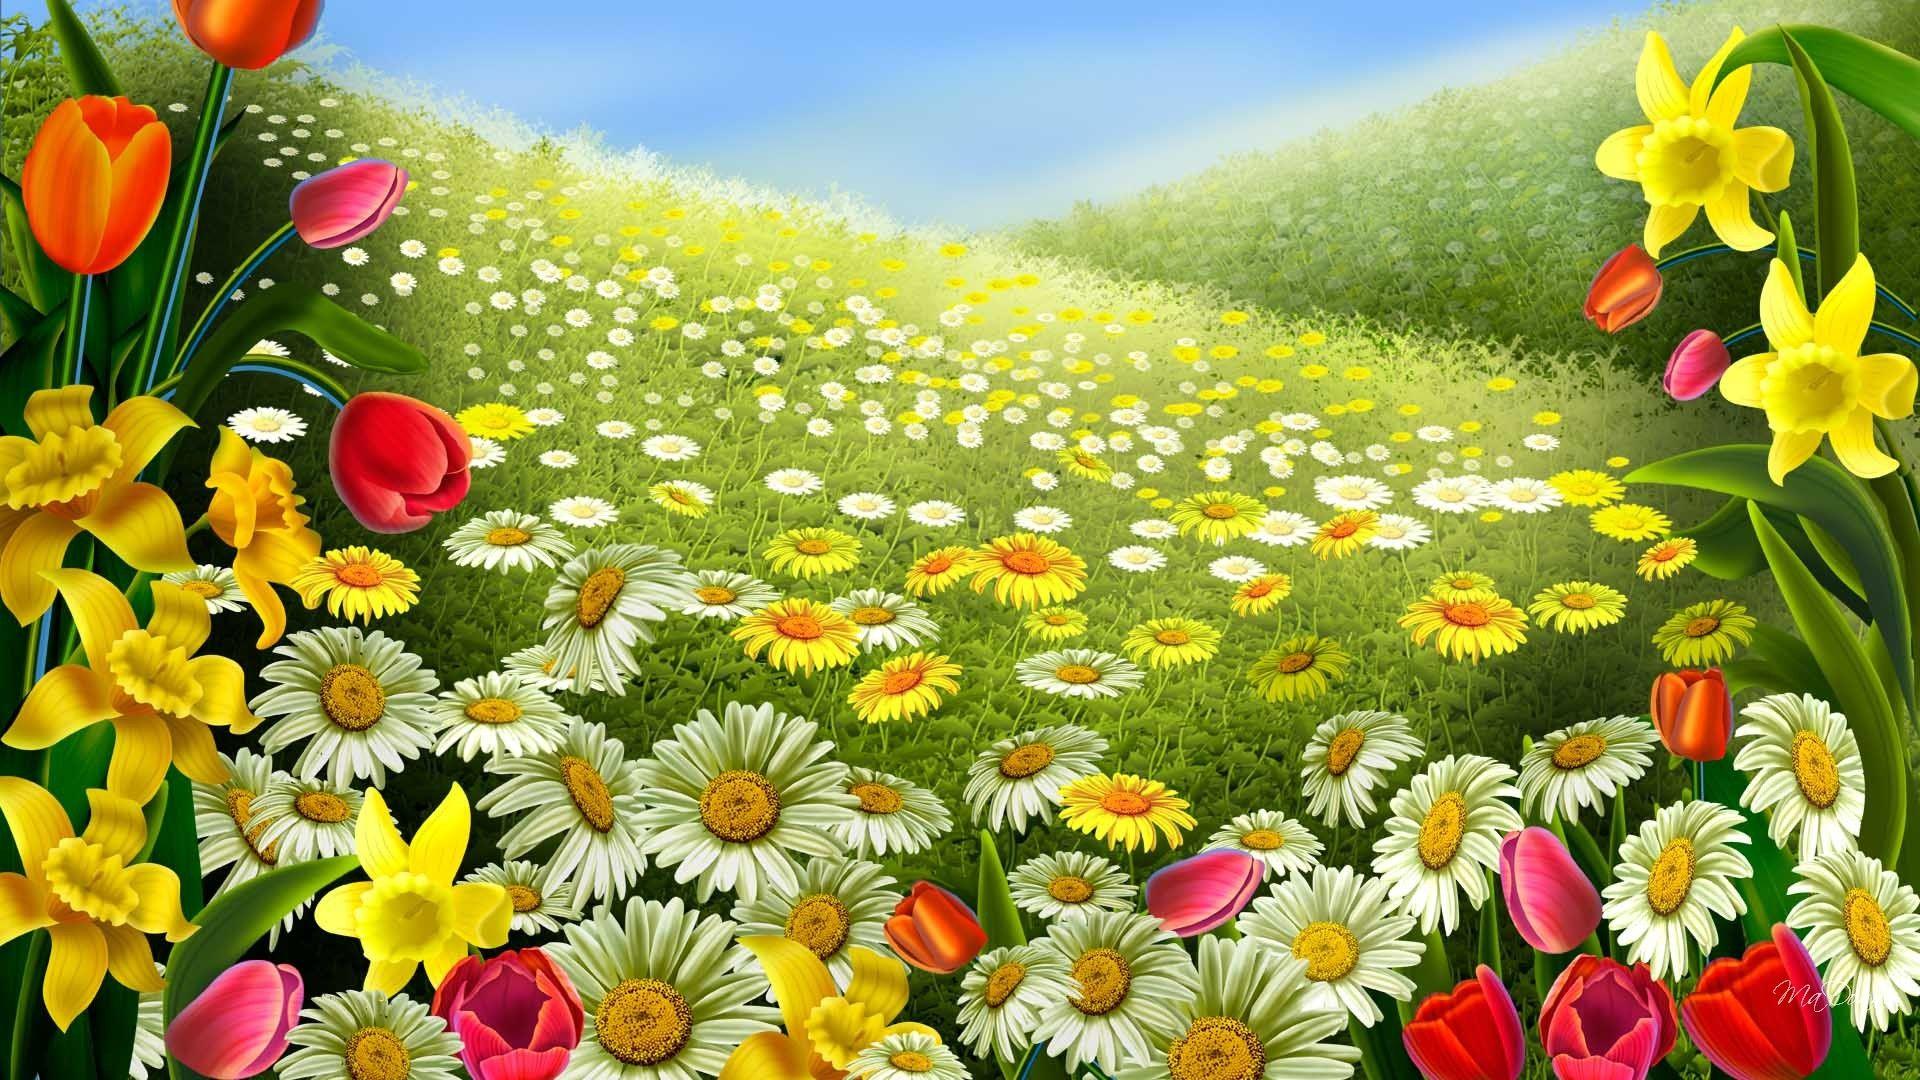 Spring Flowers wallpaper. Spring wallpaper hd, Flower image wallpaper, Spring wallpaper